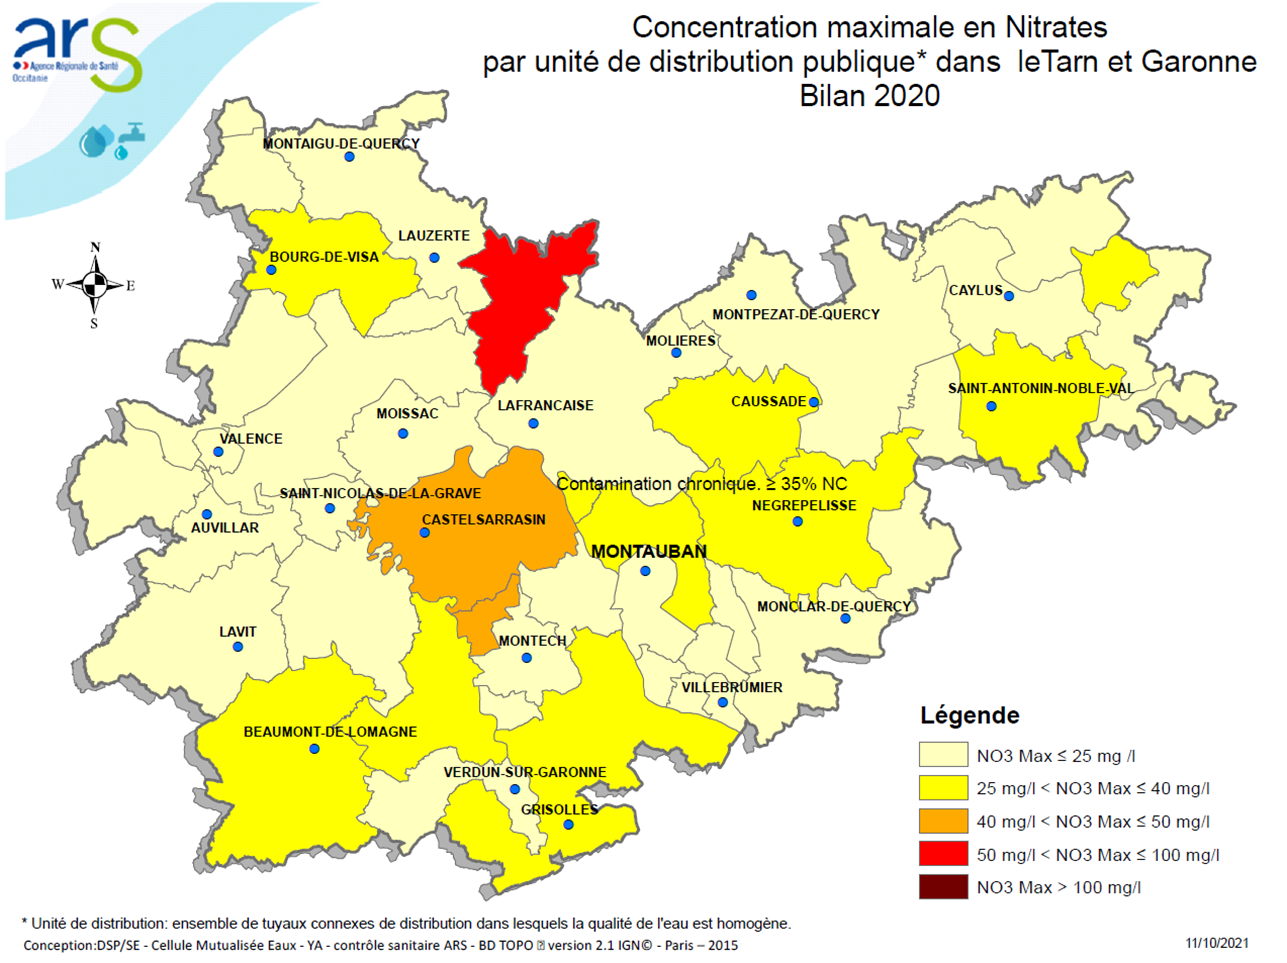 Nitrates Tarn-et-Garonne (Bilan eau 2020)